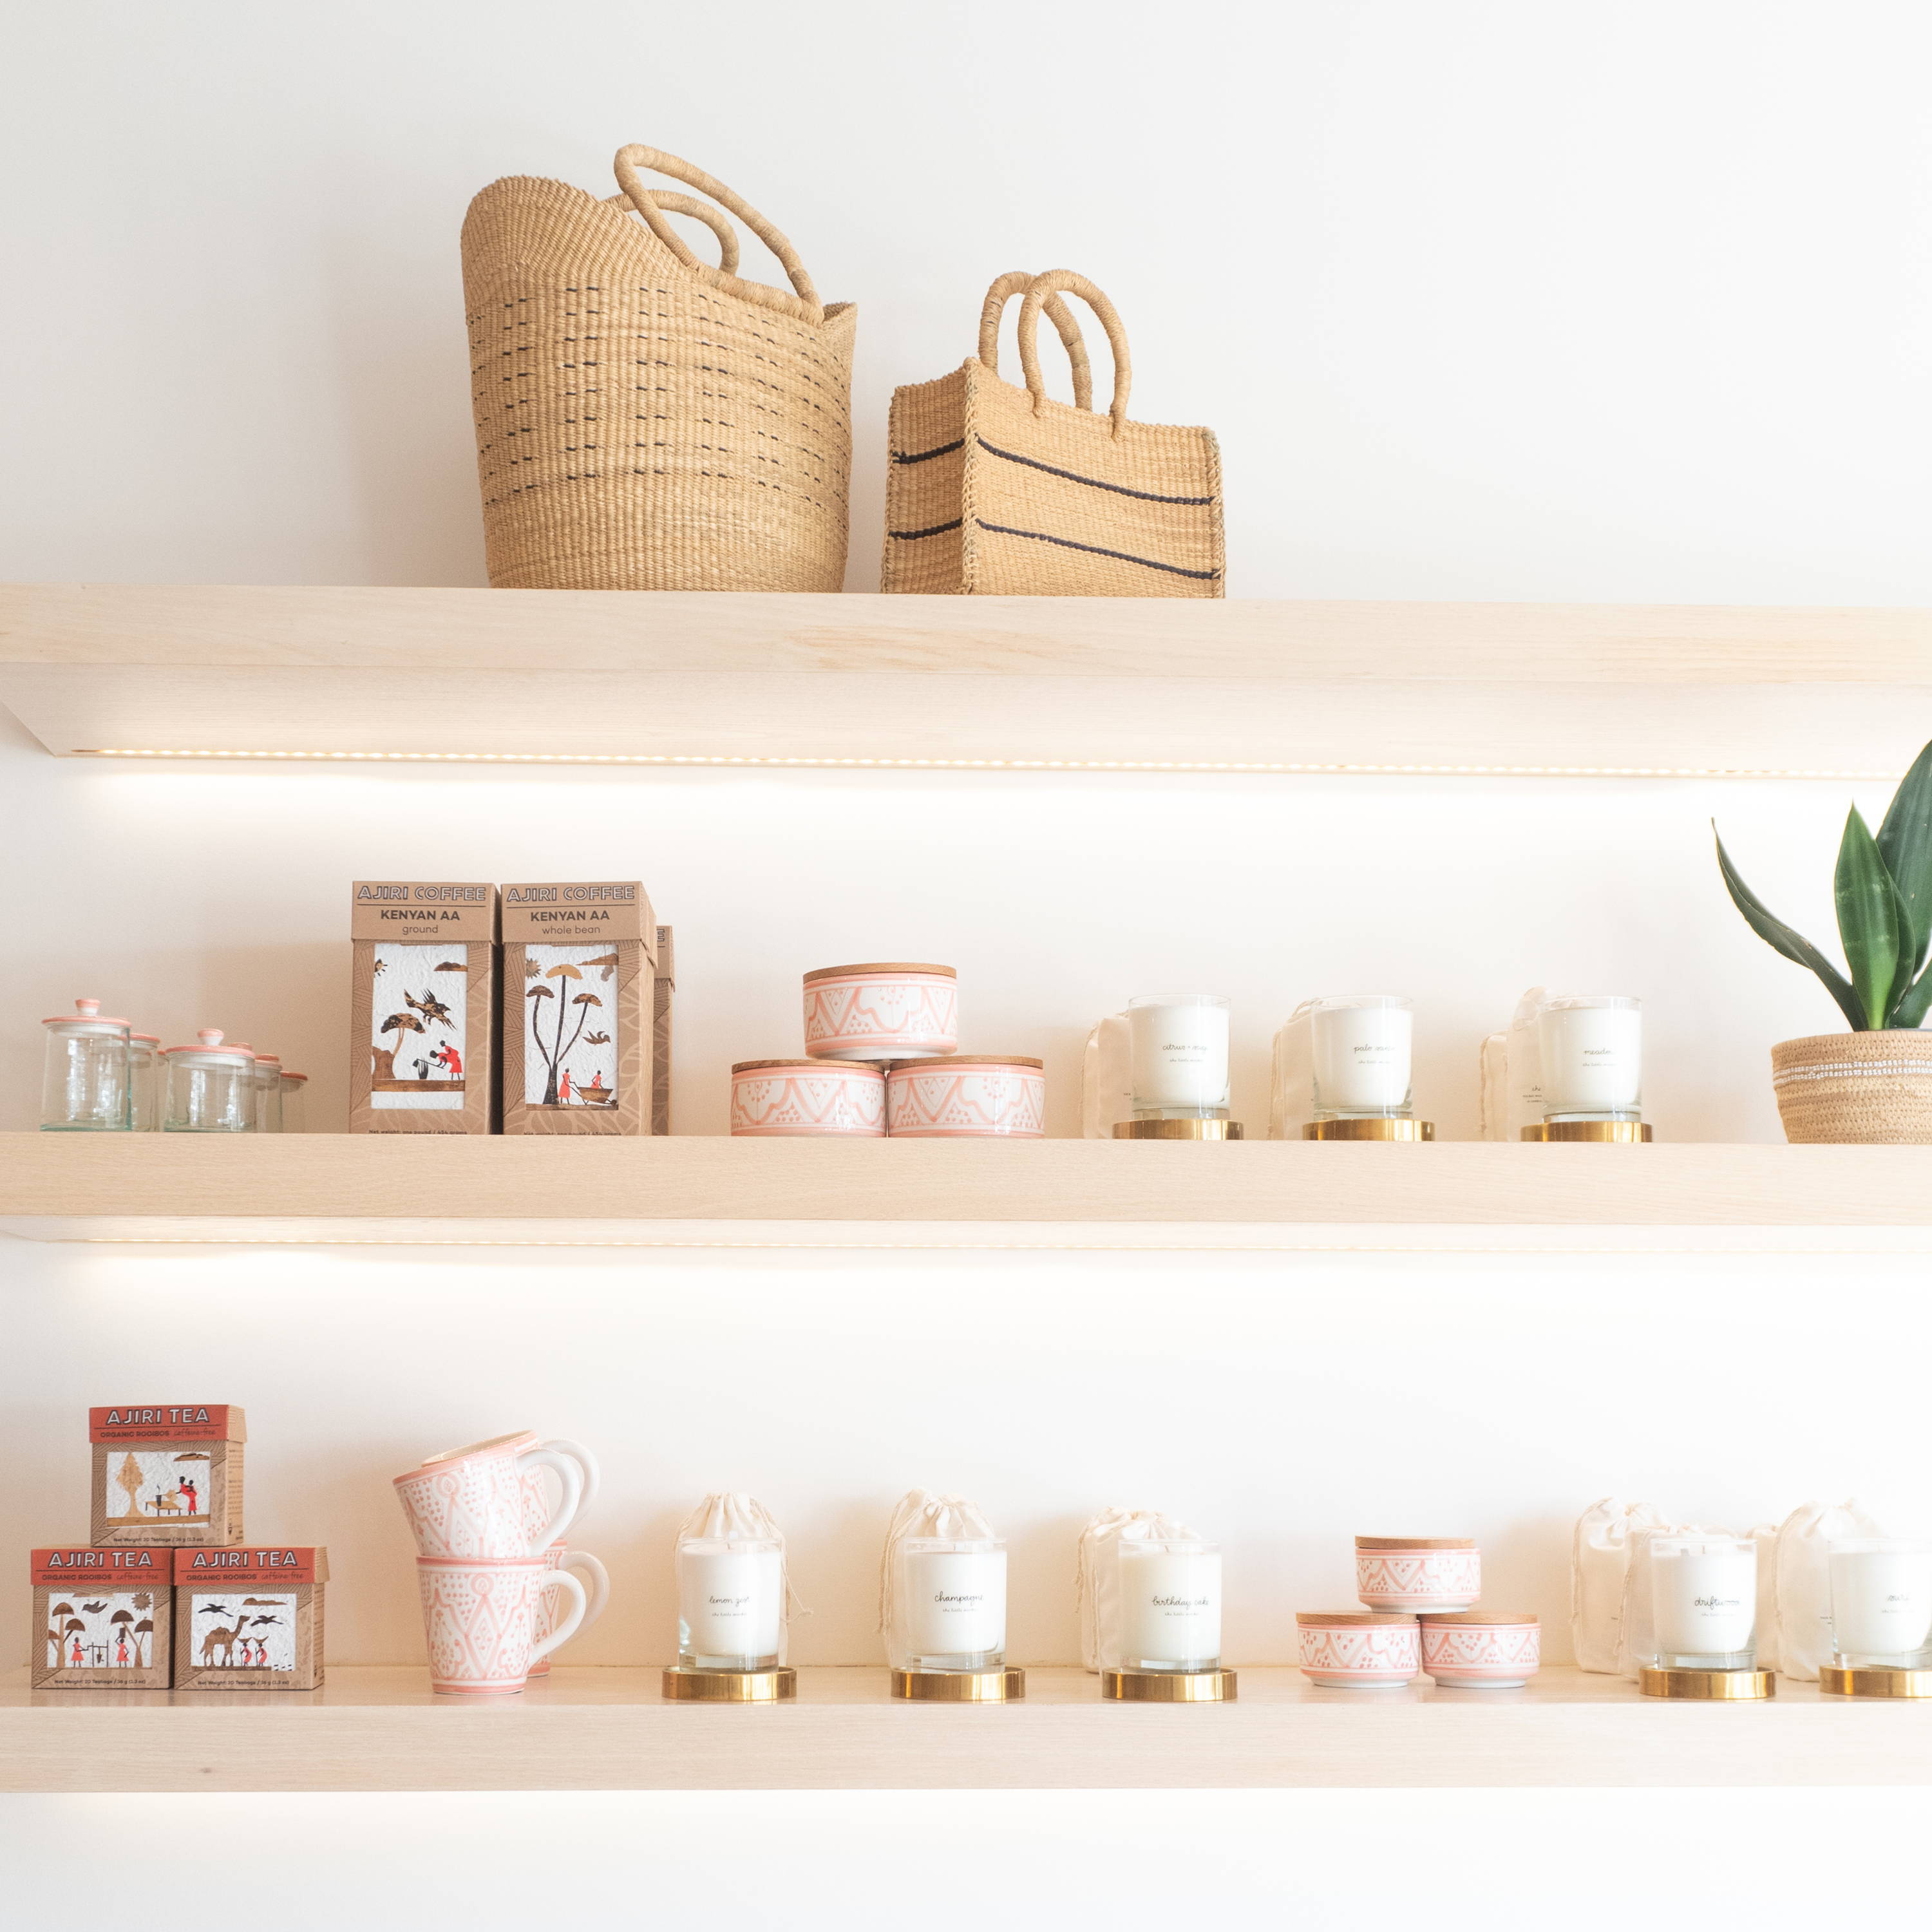 Savanna baskets, candles, teas, ceramics on shelving | The Little Market